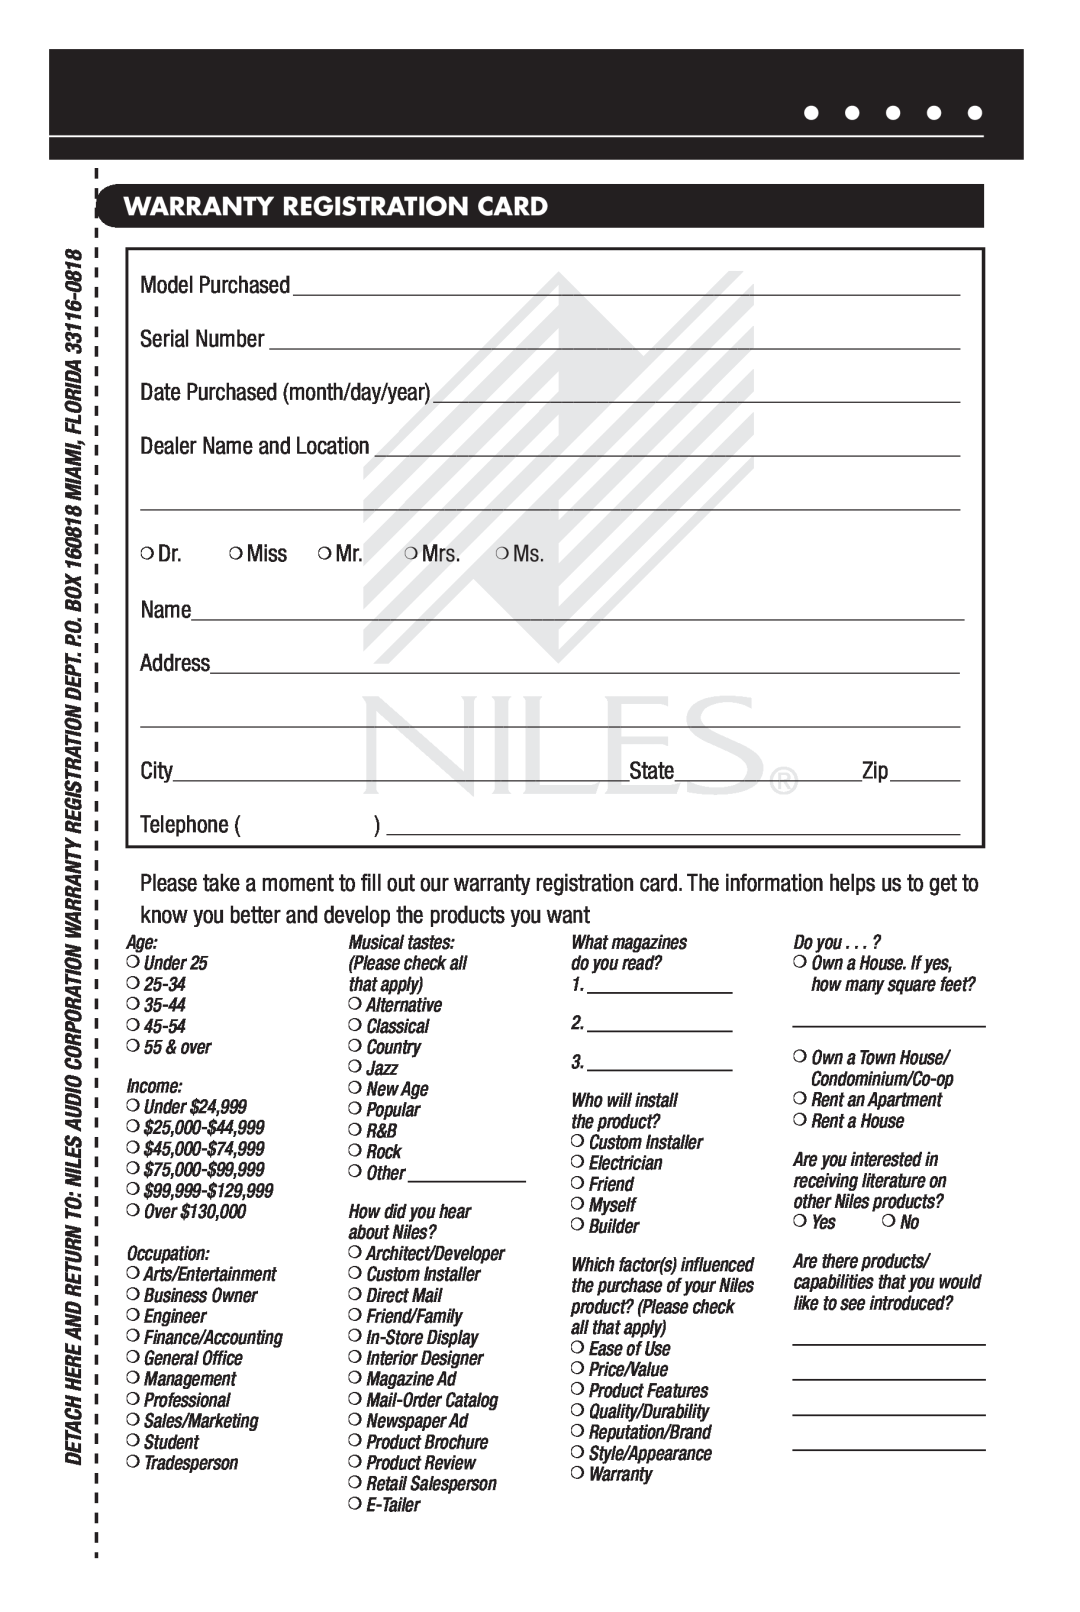 Niles Audio MSA-10A manual Warranty Registration Card 